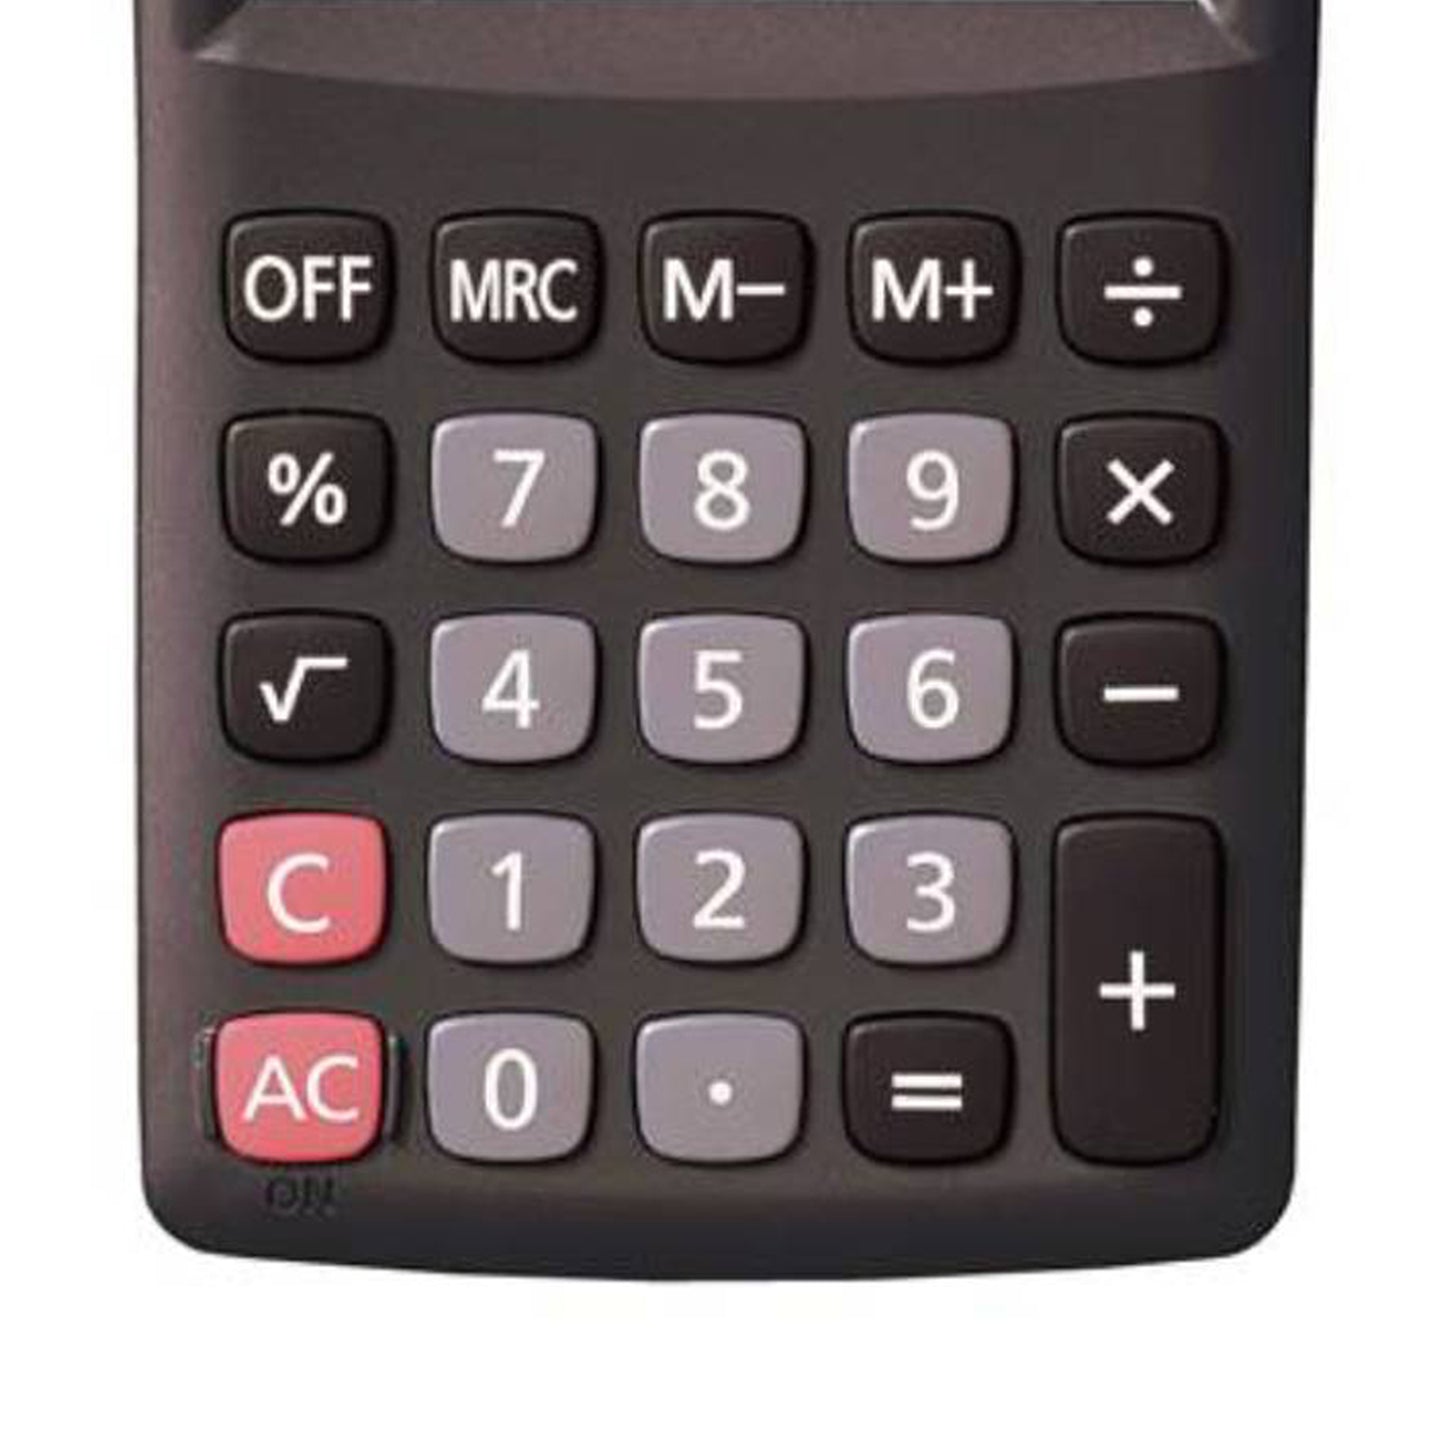 Calculadora De Bolsillo Casio HL-815L-BK Negro - Crazygames